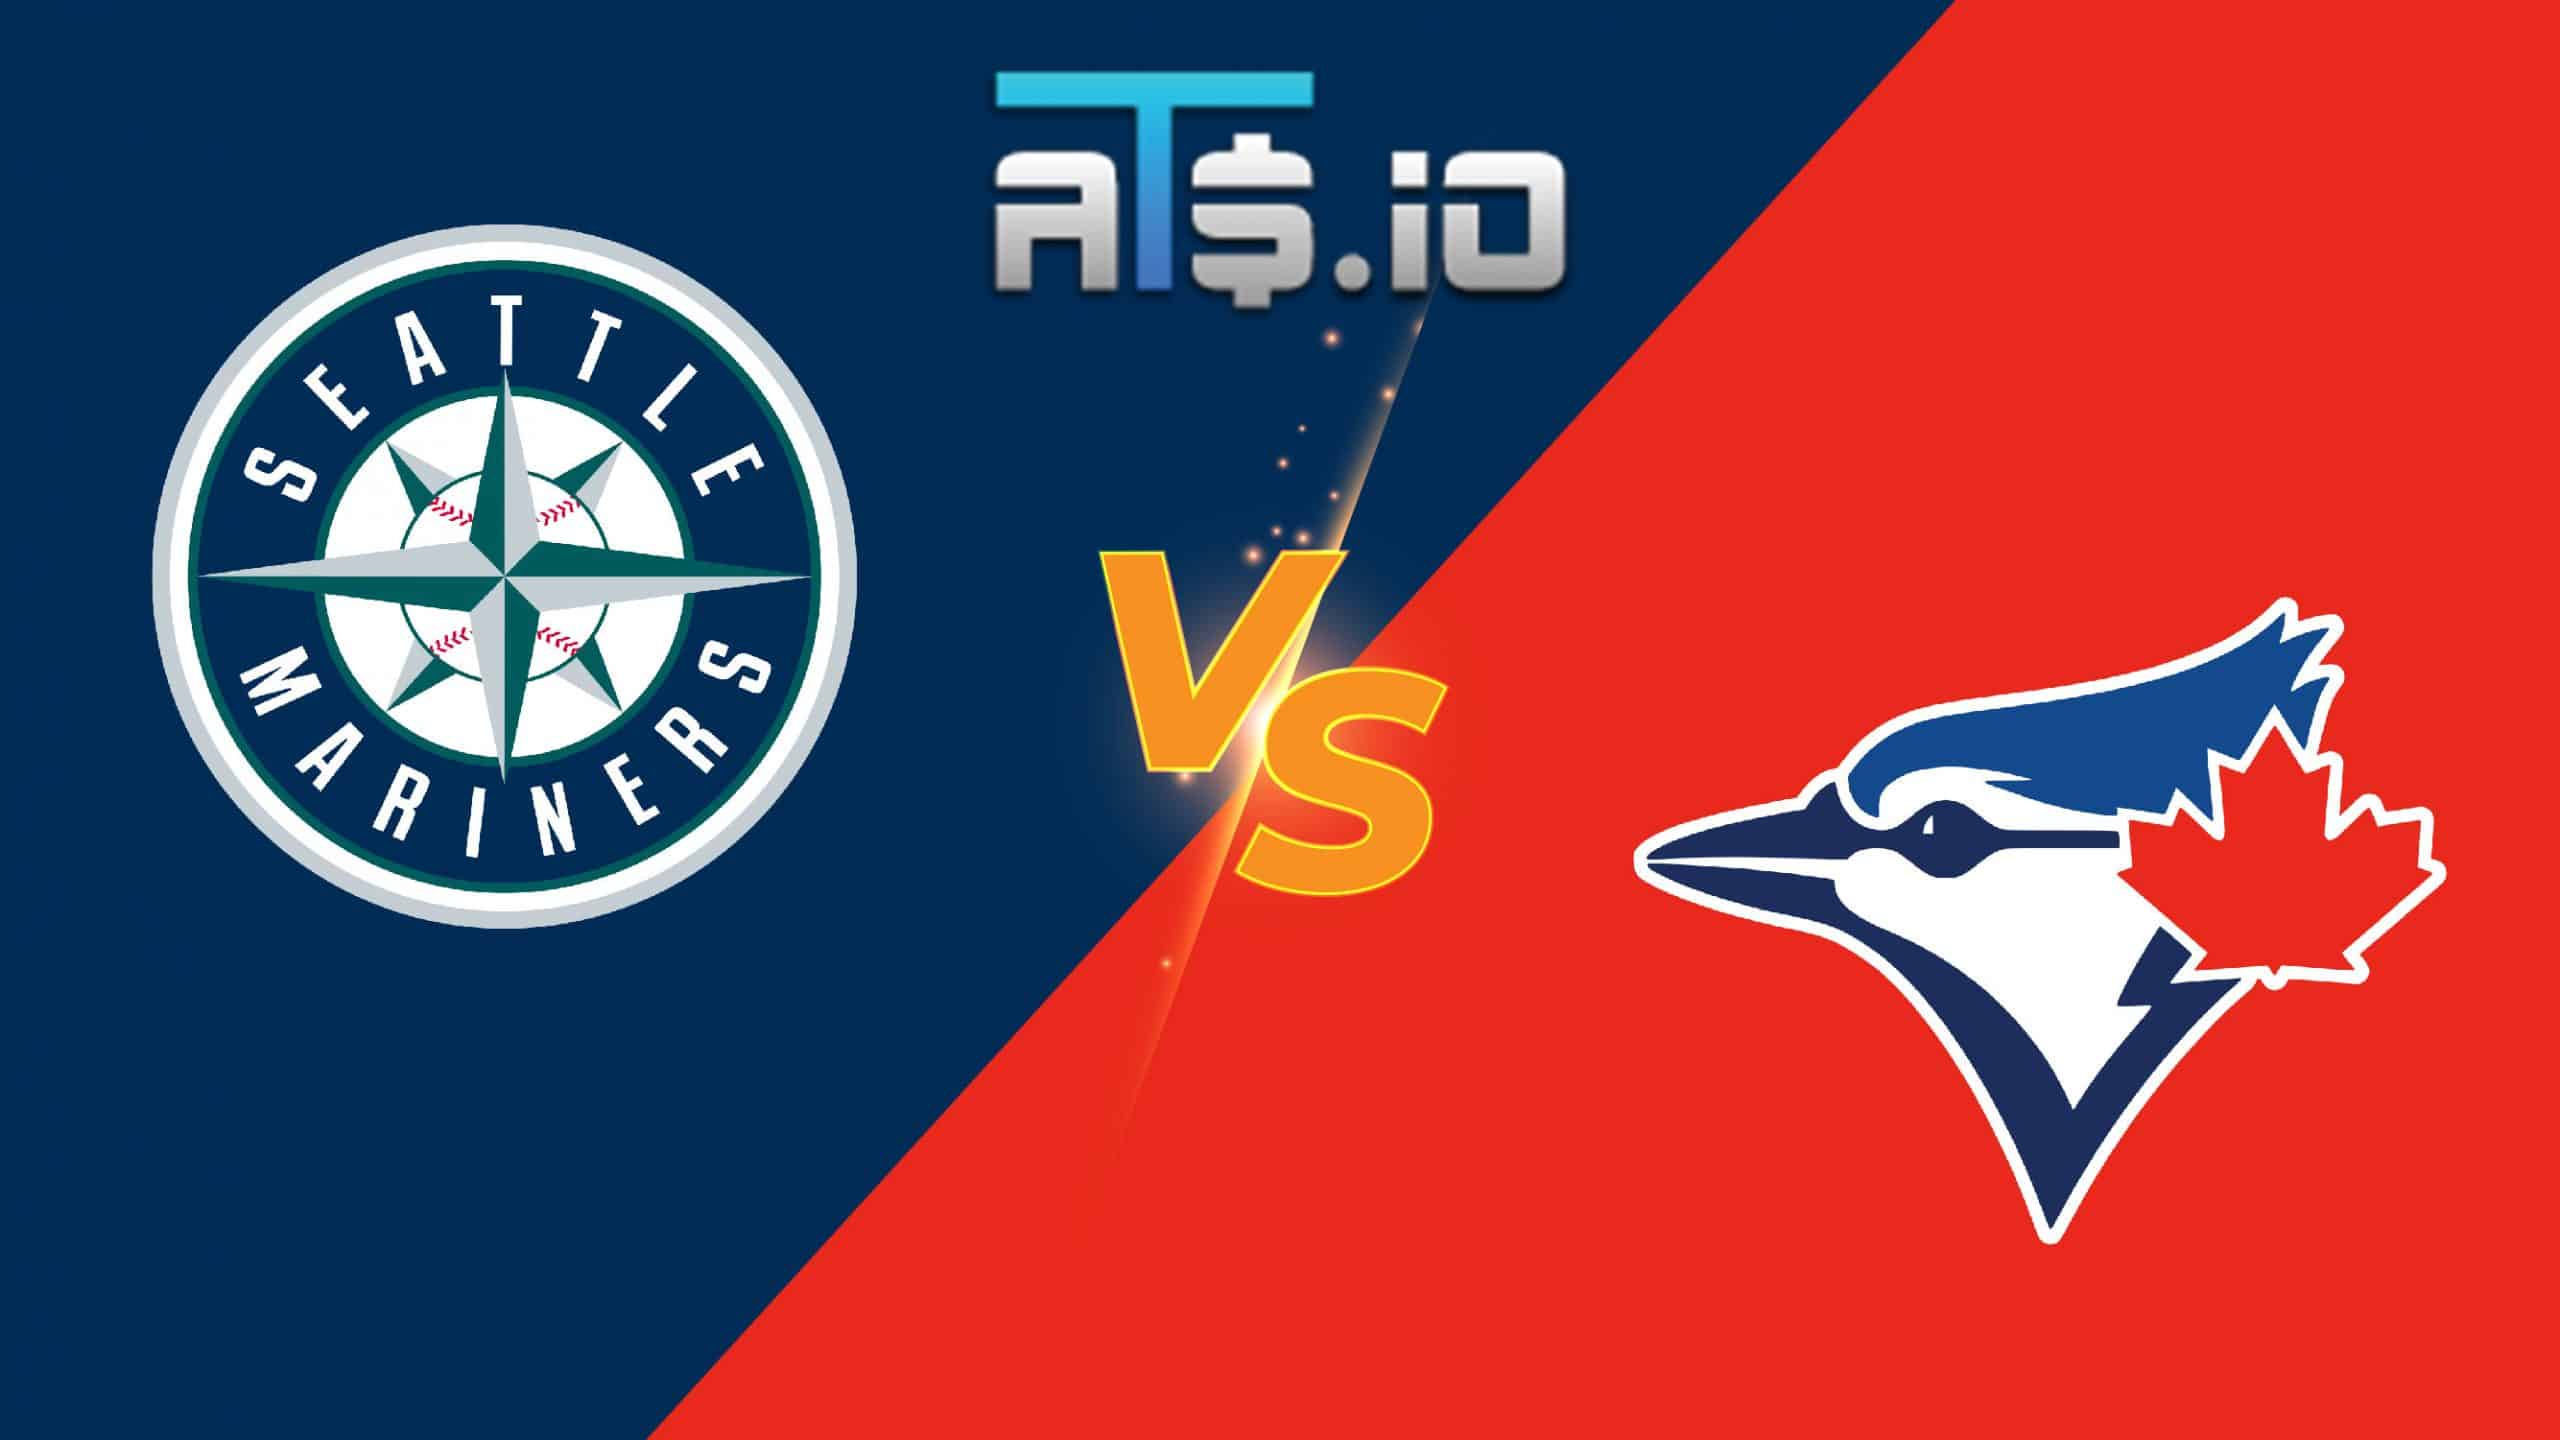 Seattle Mariners vs Toronto Blue Jays Game 2 Pick 10/8/22